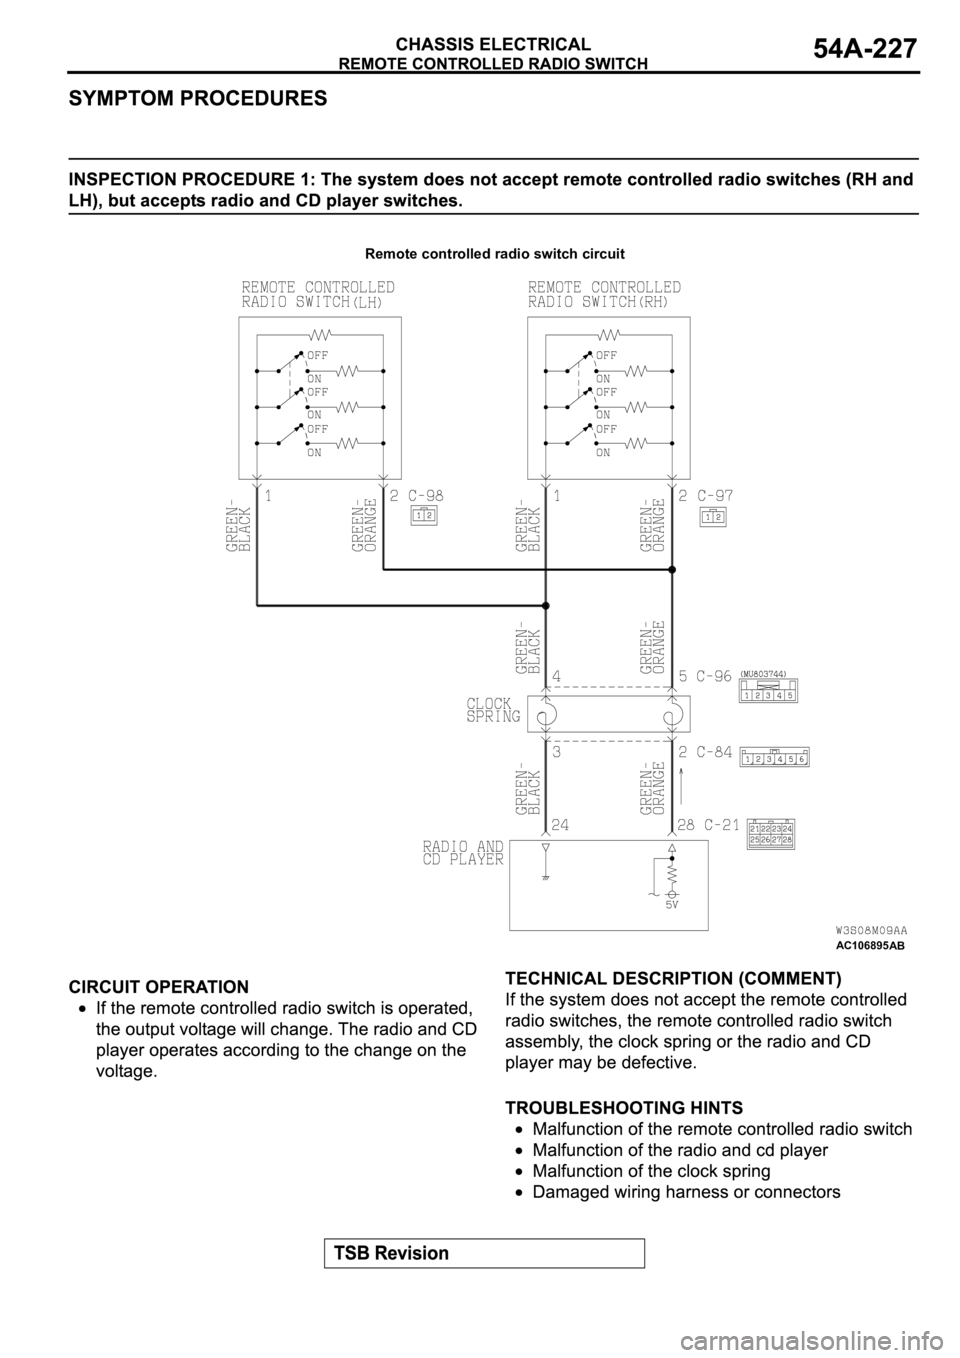 MITSUBISHI ECLIPSE 2003  Service Repair Manual AC106895
Remote controlled radio switch circuit
AB 